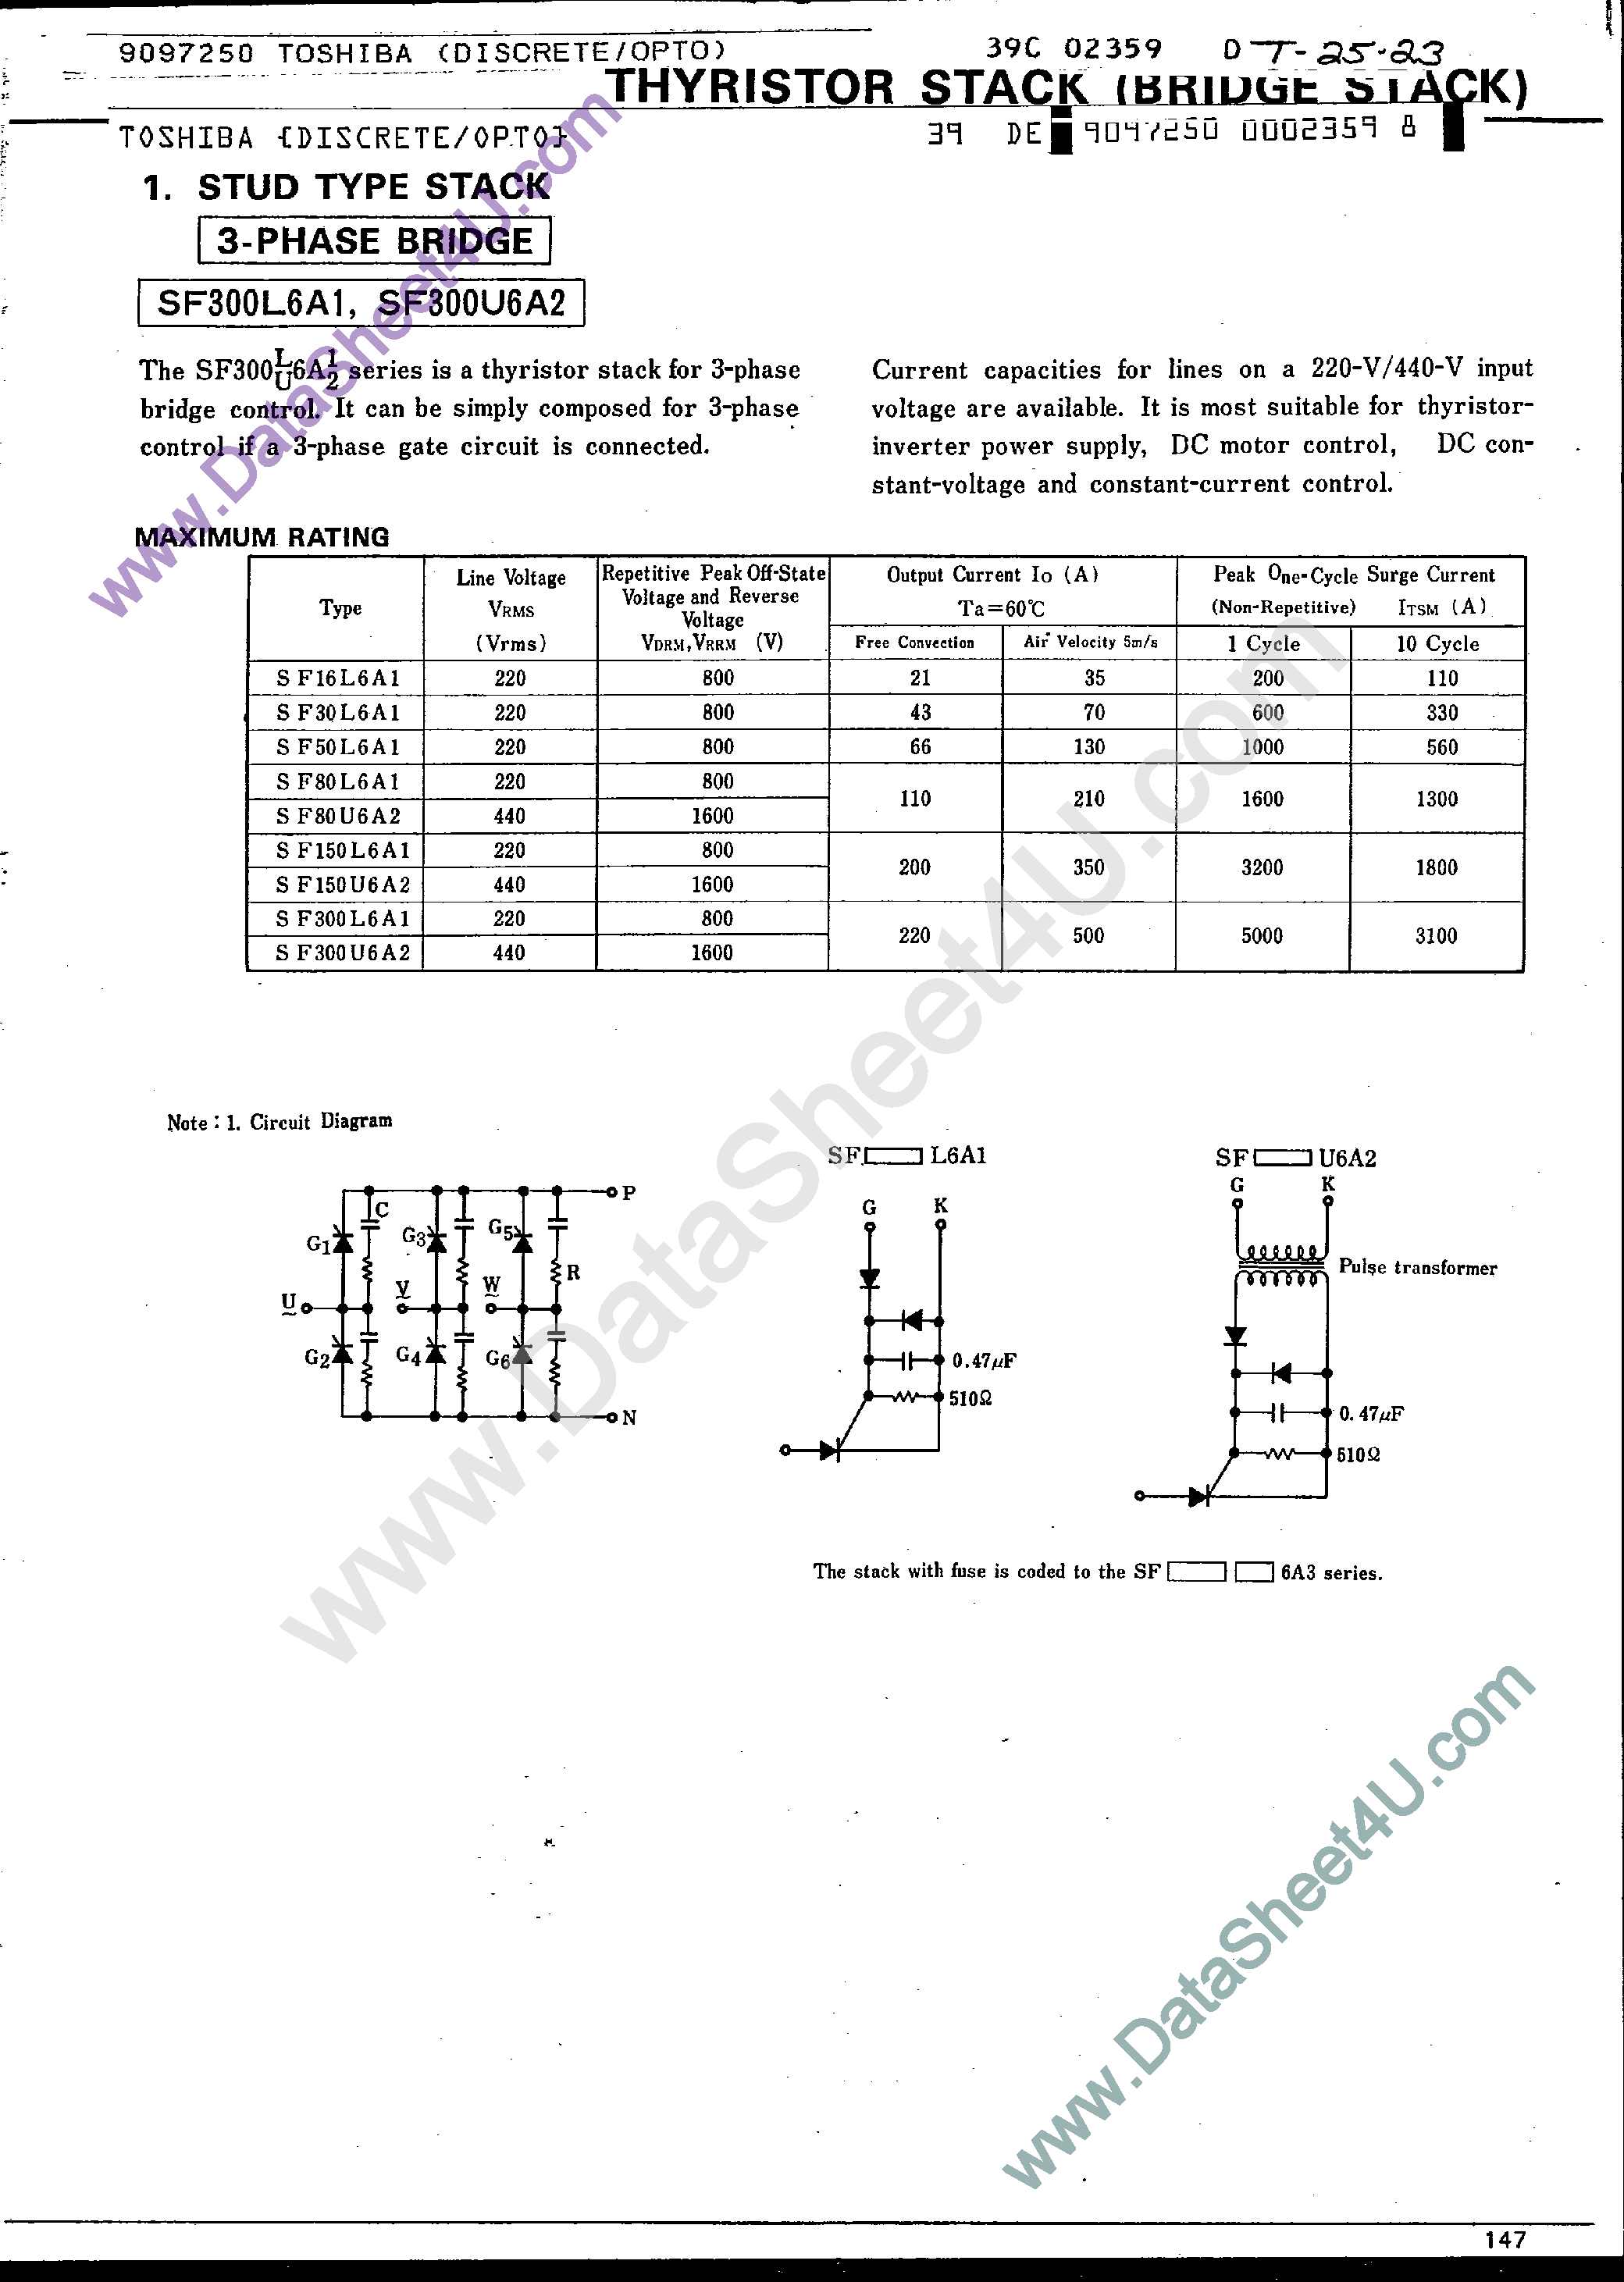 Datasheet SF150L6A1 - (SF1xxxx) Stud Type Stack / 3-Phase Bridge page 1